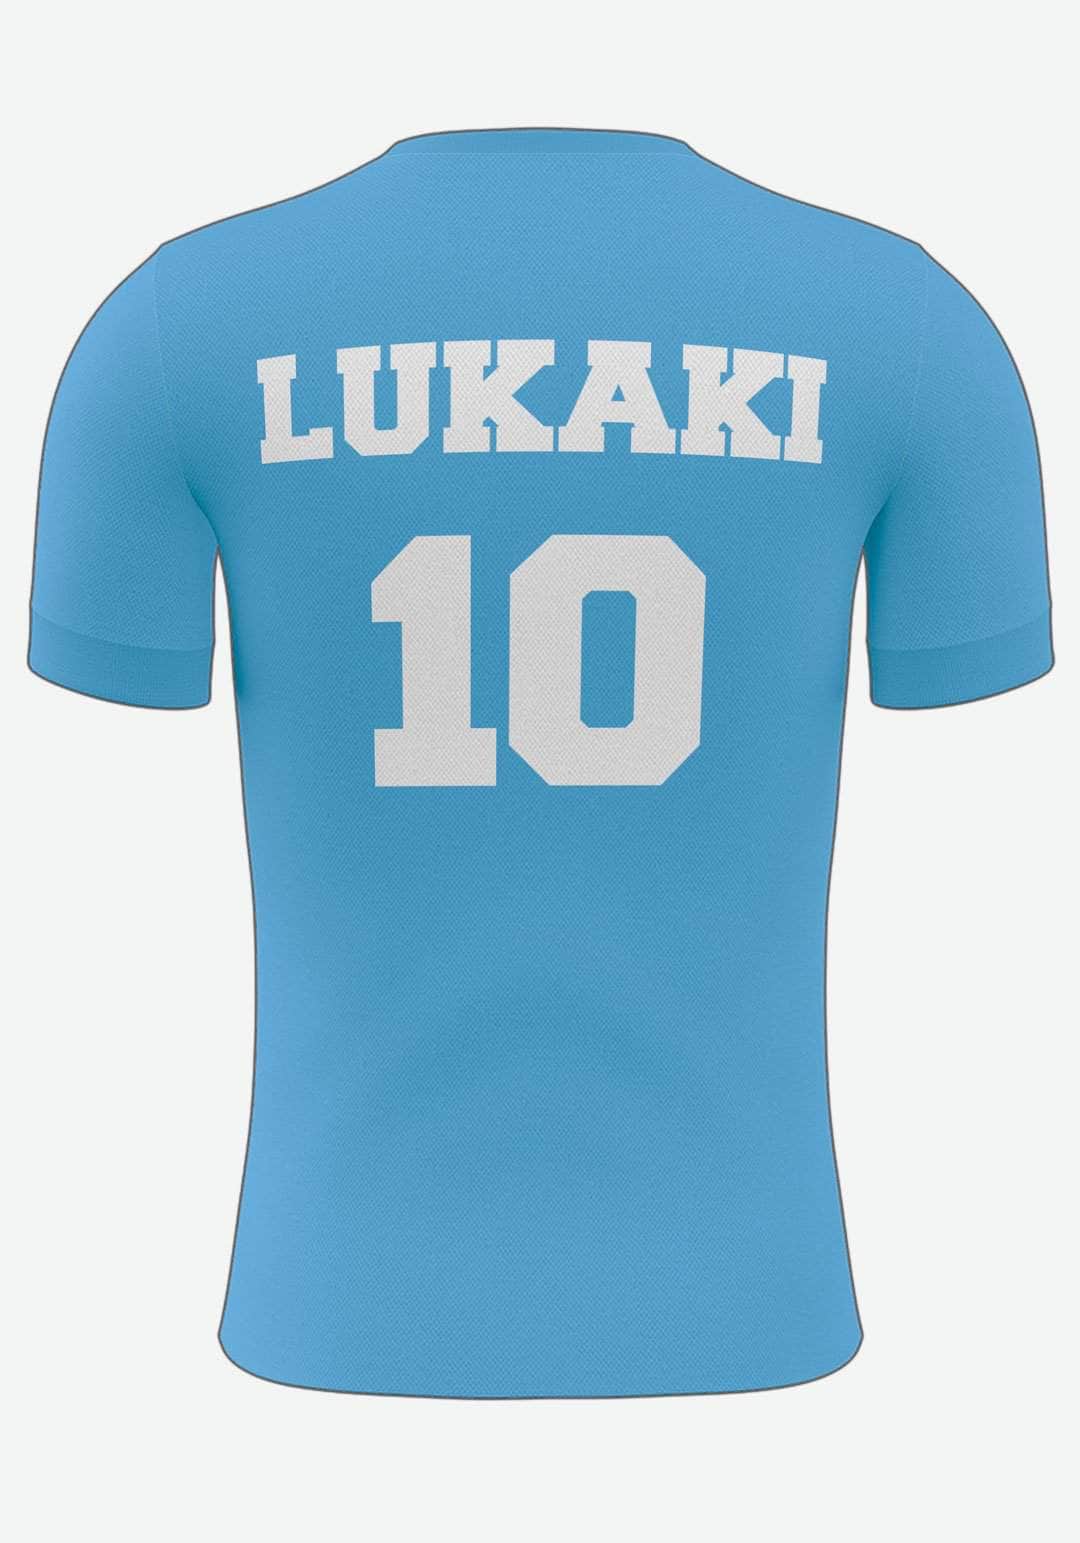 Se Manchester C. Fodboldplakat - med eget navn og nummer, 21x30 hos Lukaki.dk